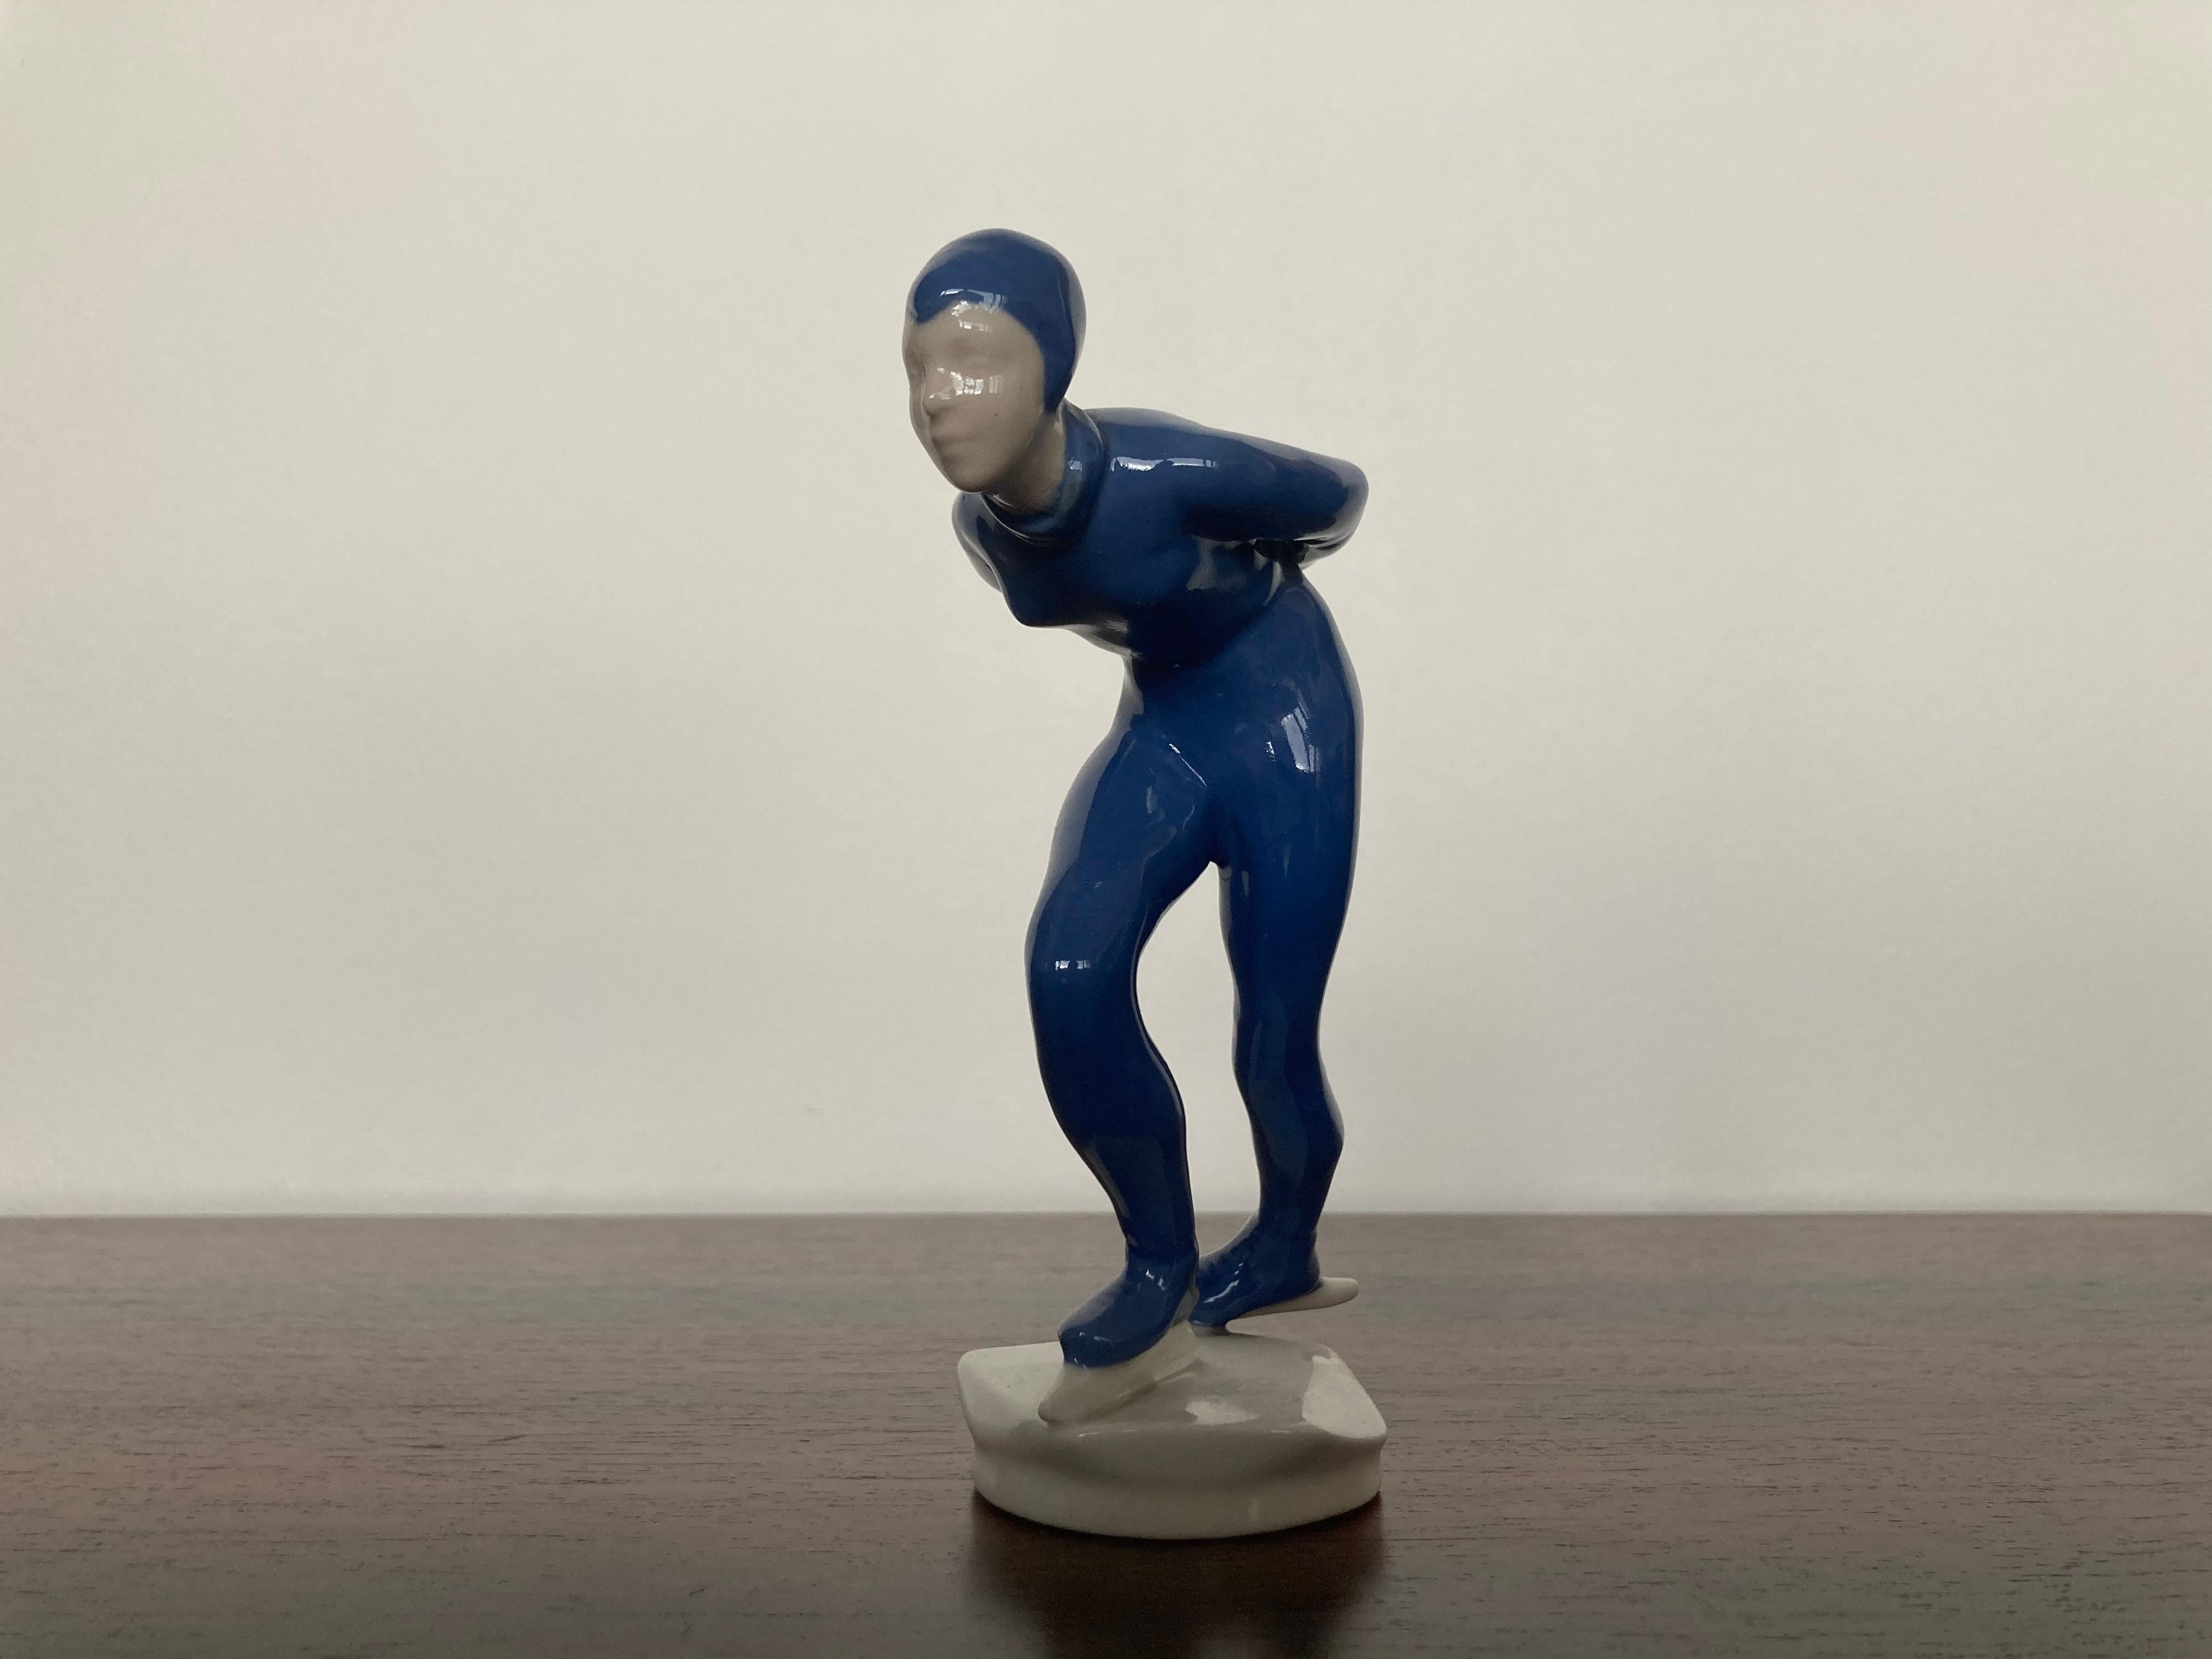 Glazed Sport Ceramic Sculpture Athlete Ice Skater by J.Hejdova Holeckova, 1950s For Sale